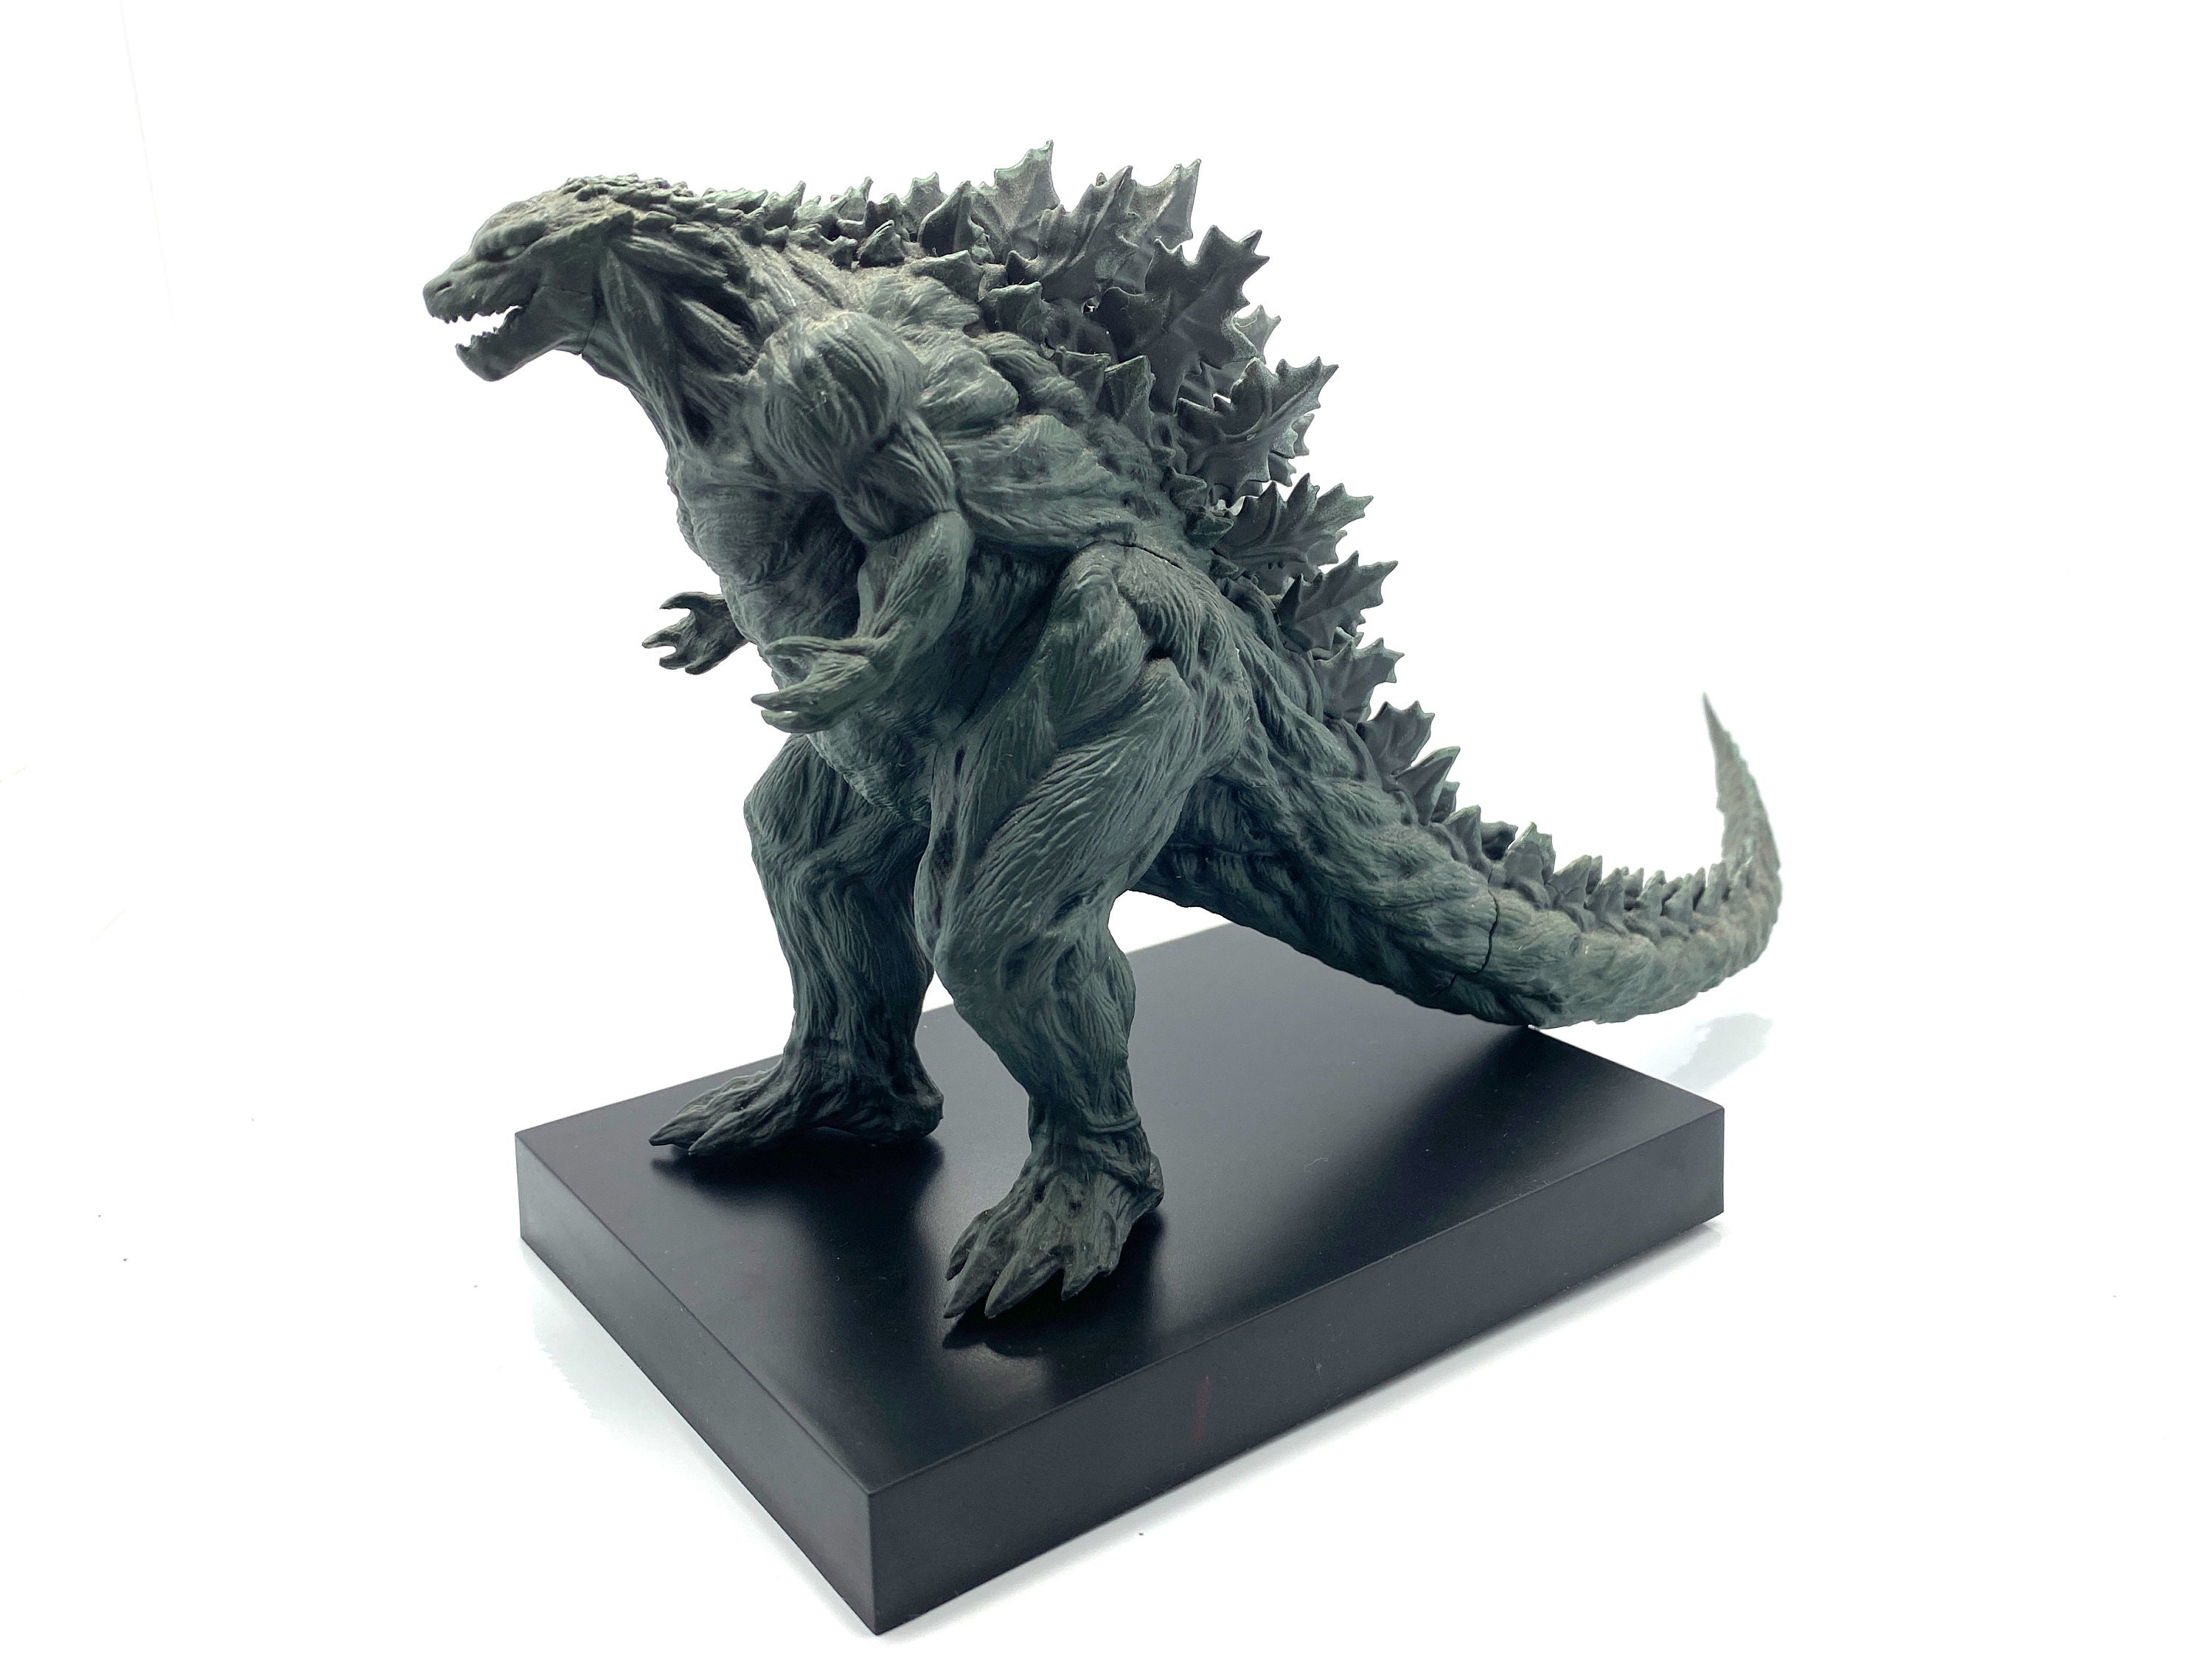 Godzilla earth peso